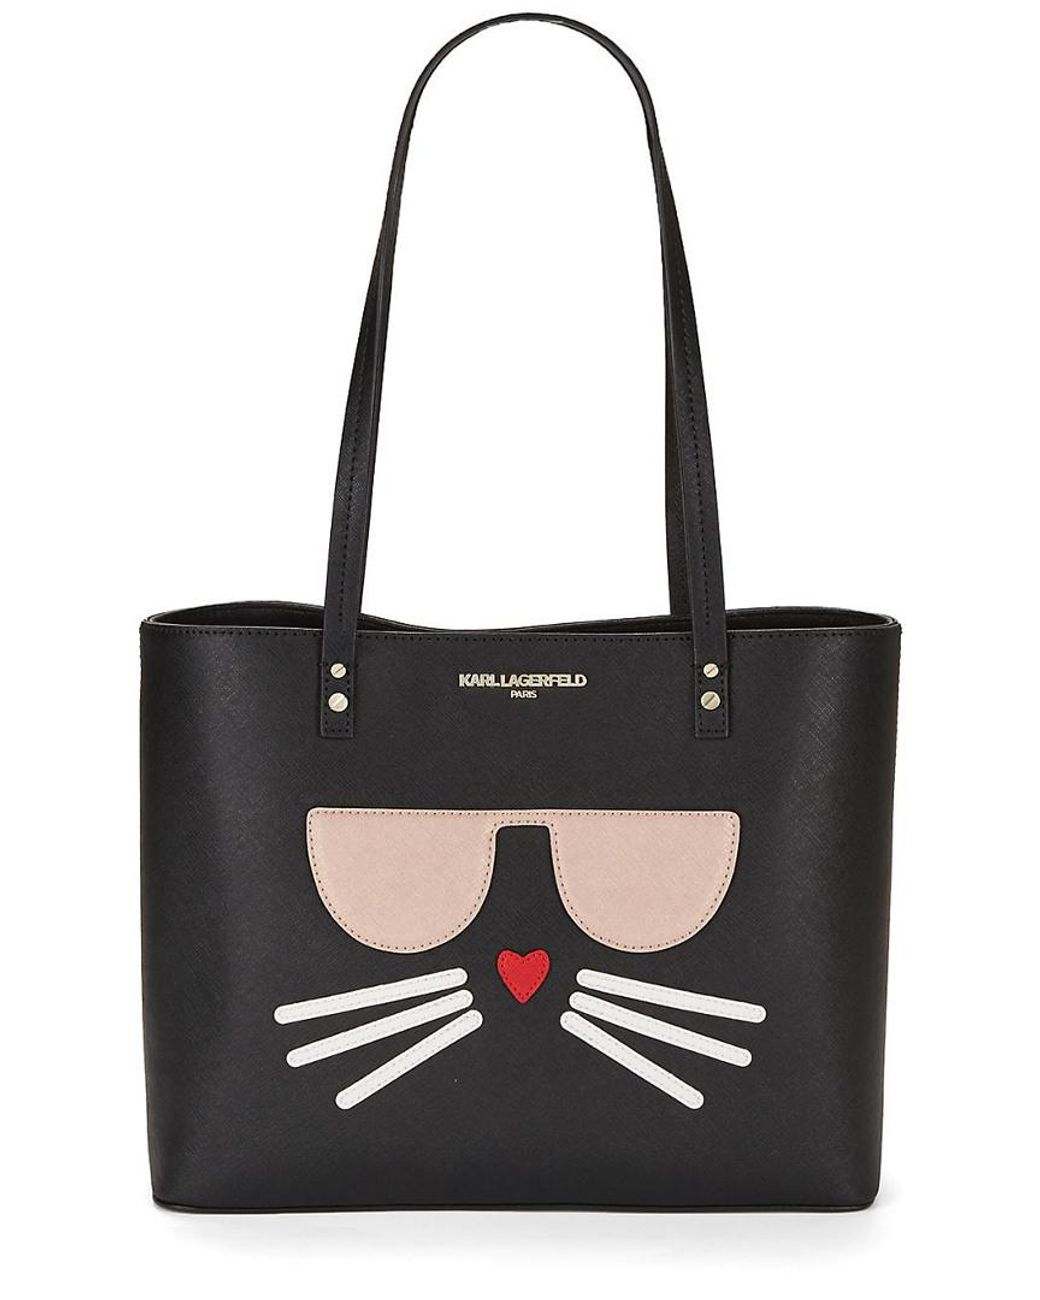 KARL LAGERFELD PARIS MAYBELLE Crossbody Bag BLACK HEART CAT PARIS KL Logo  NEW | eBay